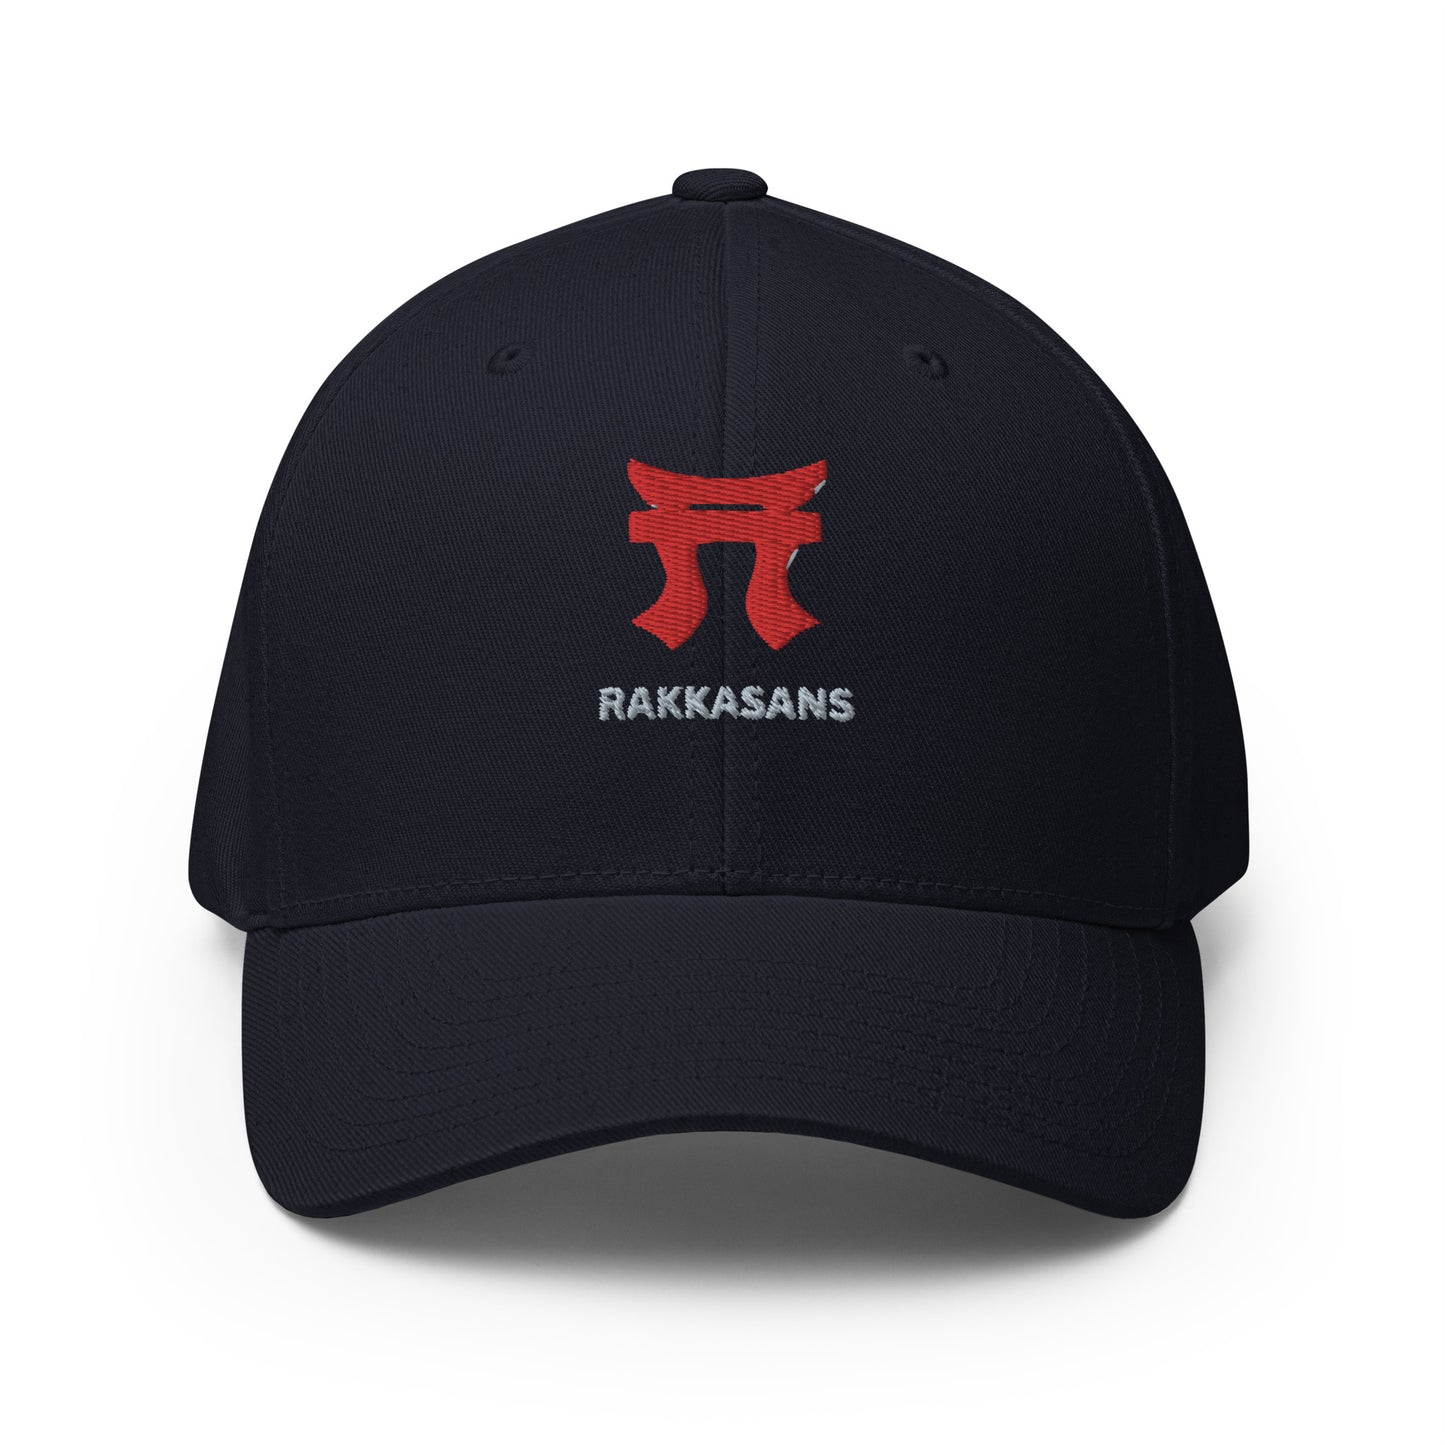 Rakkgear "Rakkasans" Navy Embroidered Fitted Baseball Cap: Multicam black cap with iconic Rakkasans Logo embroidery on the front.